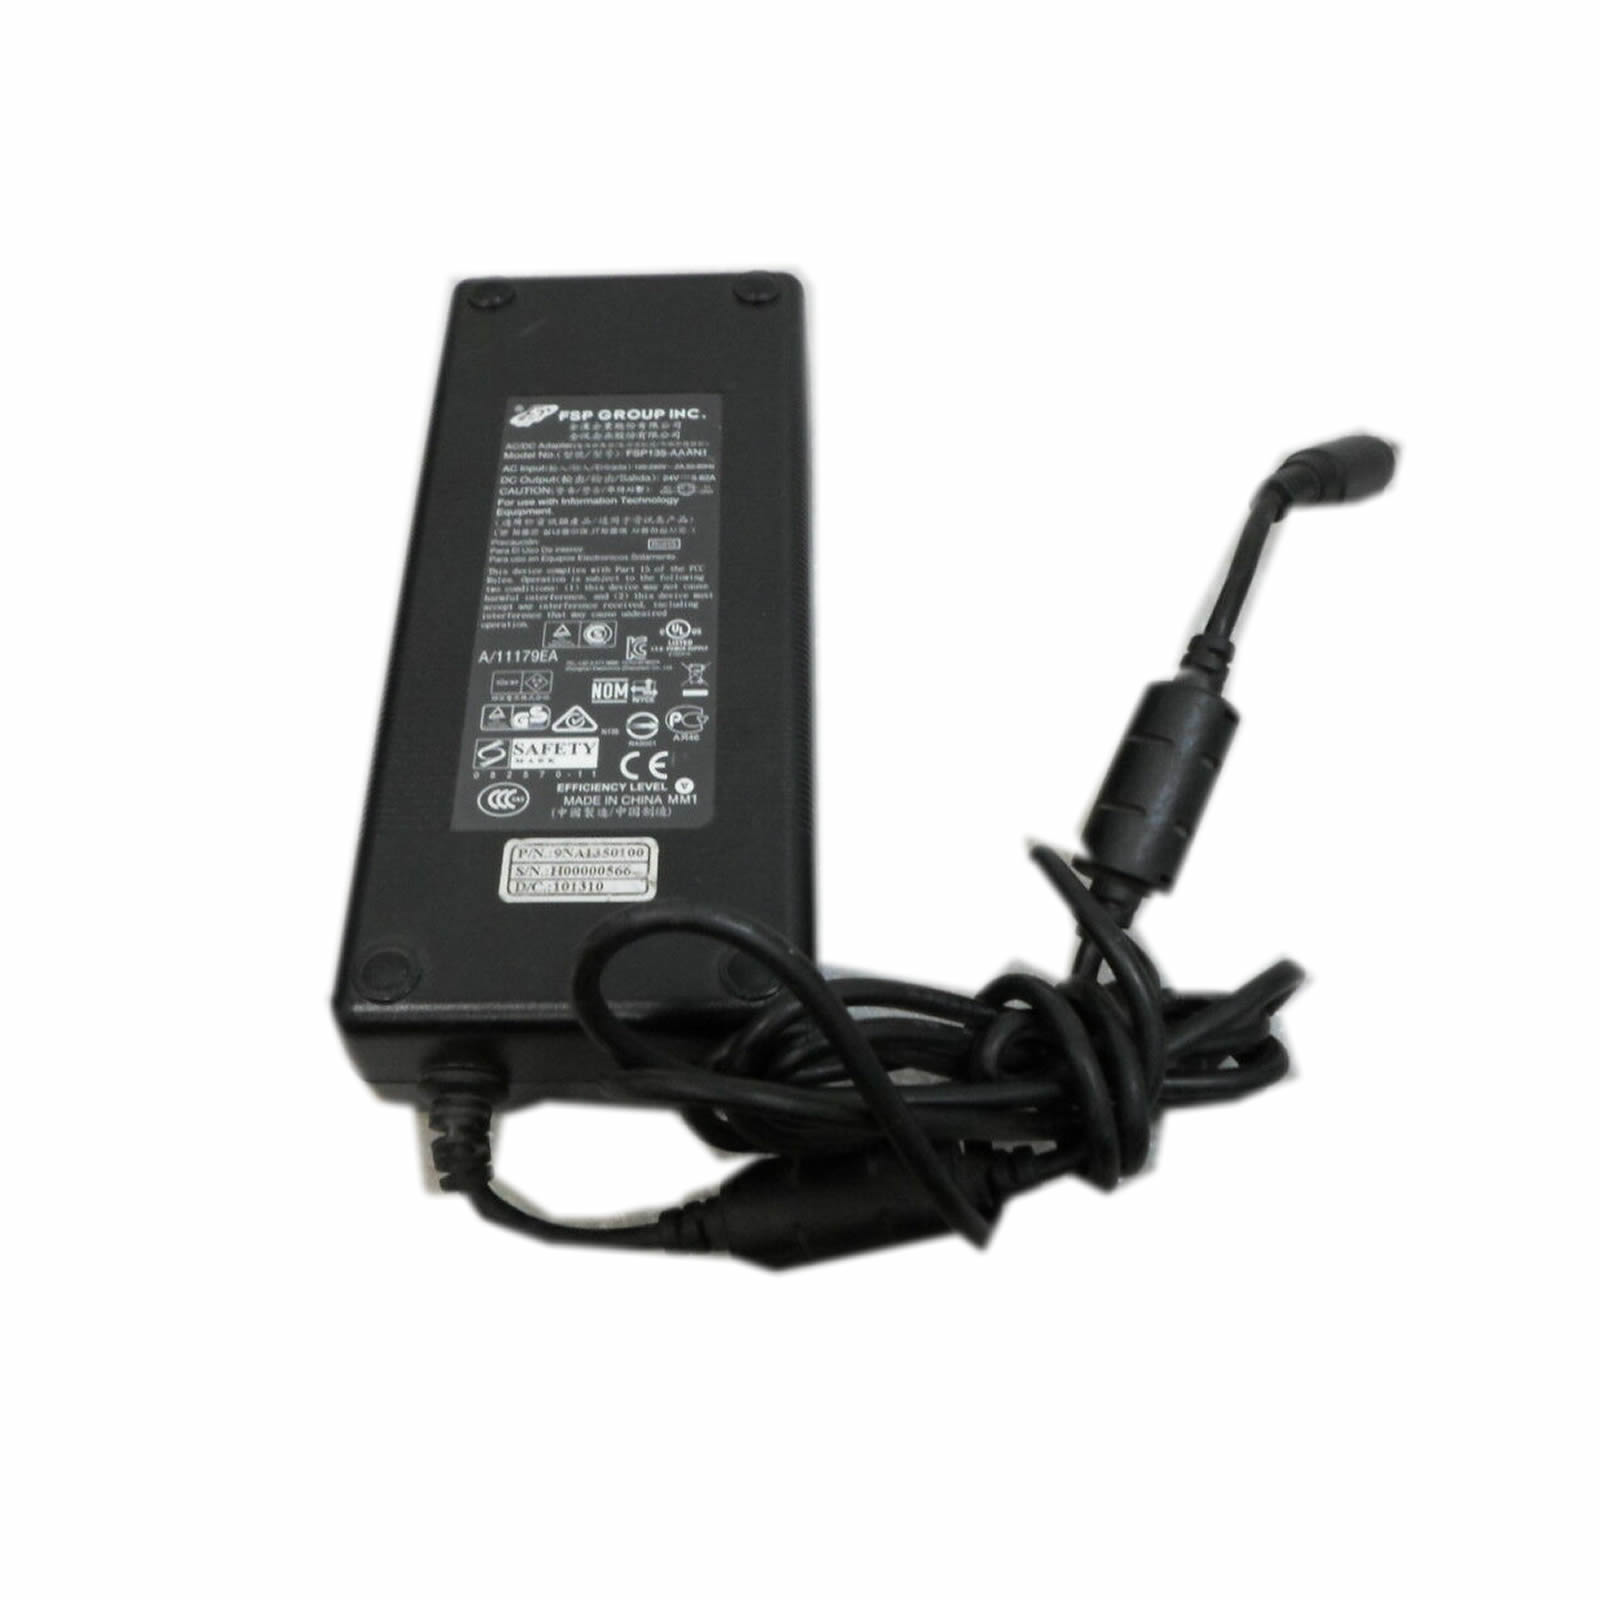 FSP 135-AAAN1 adaptateur chargeur 24V 5.62A 135W alimentation originale pour FSP Switching Power séries